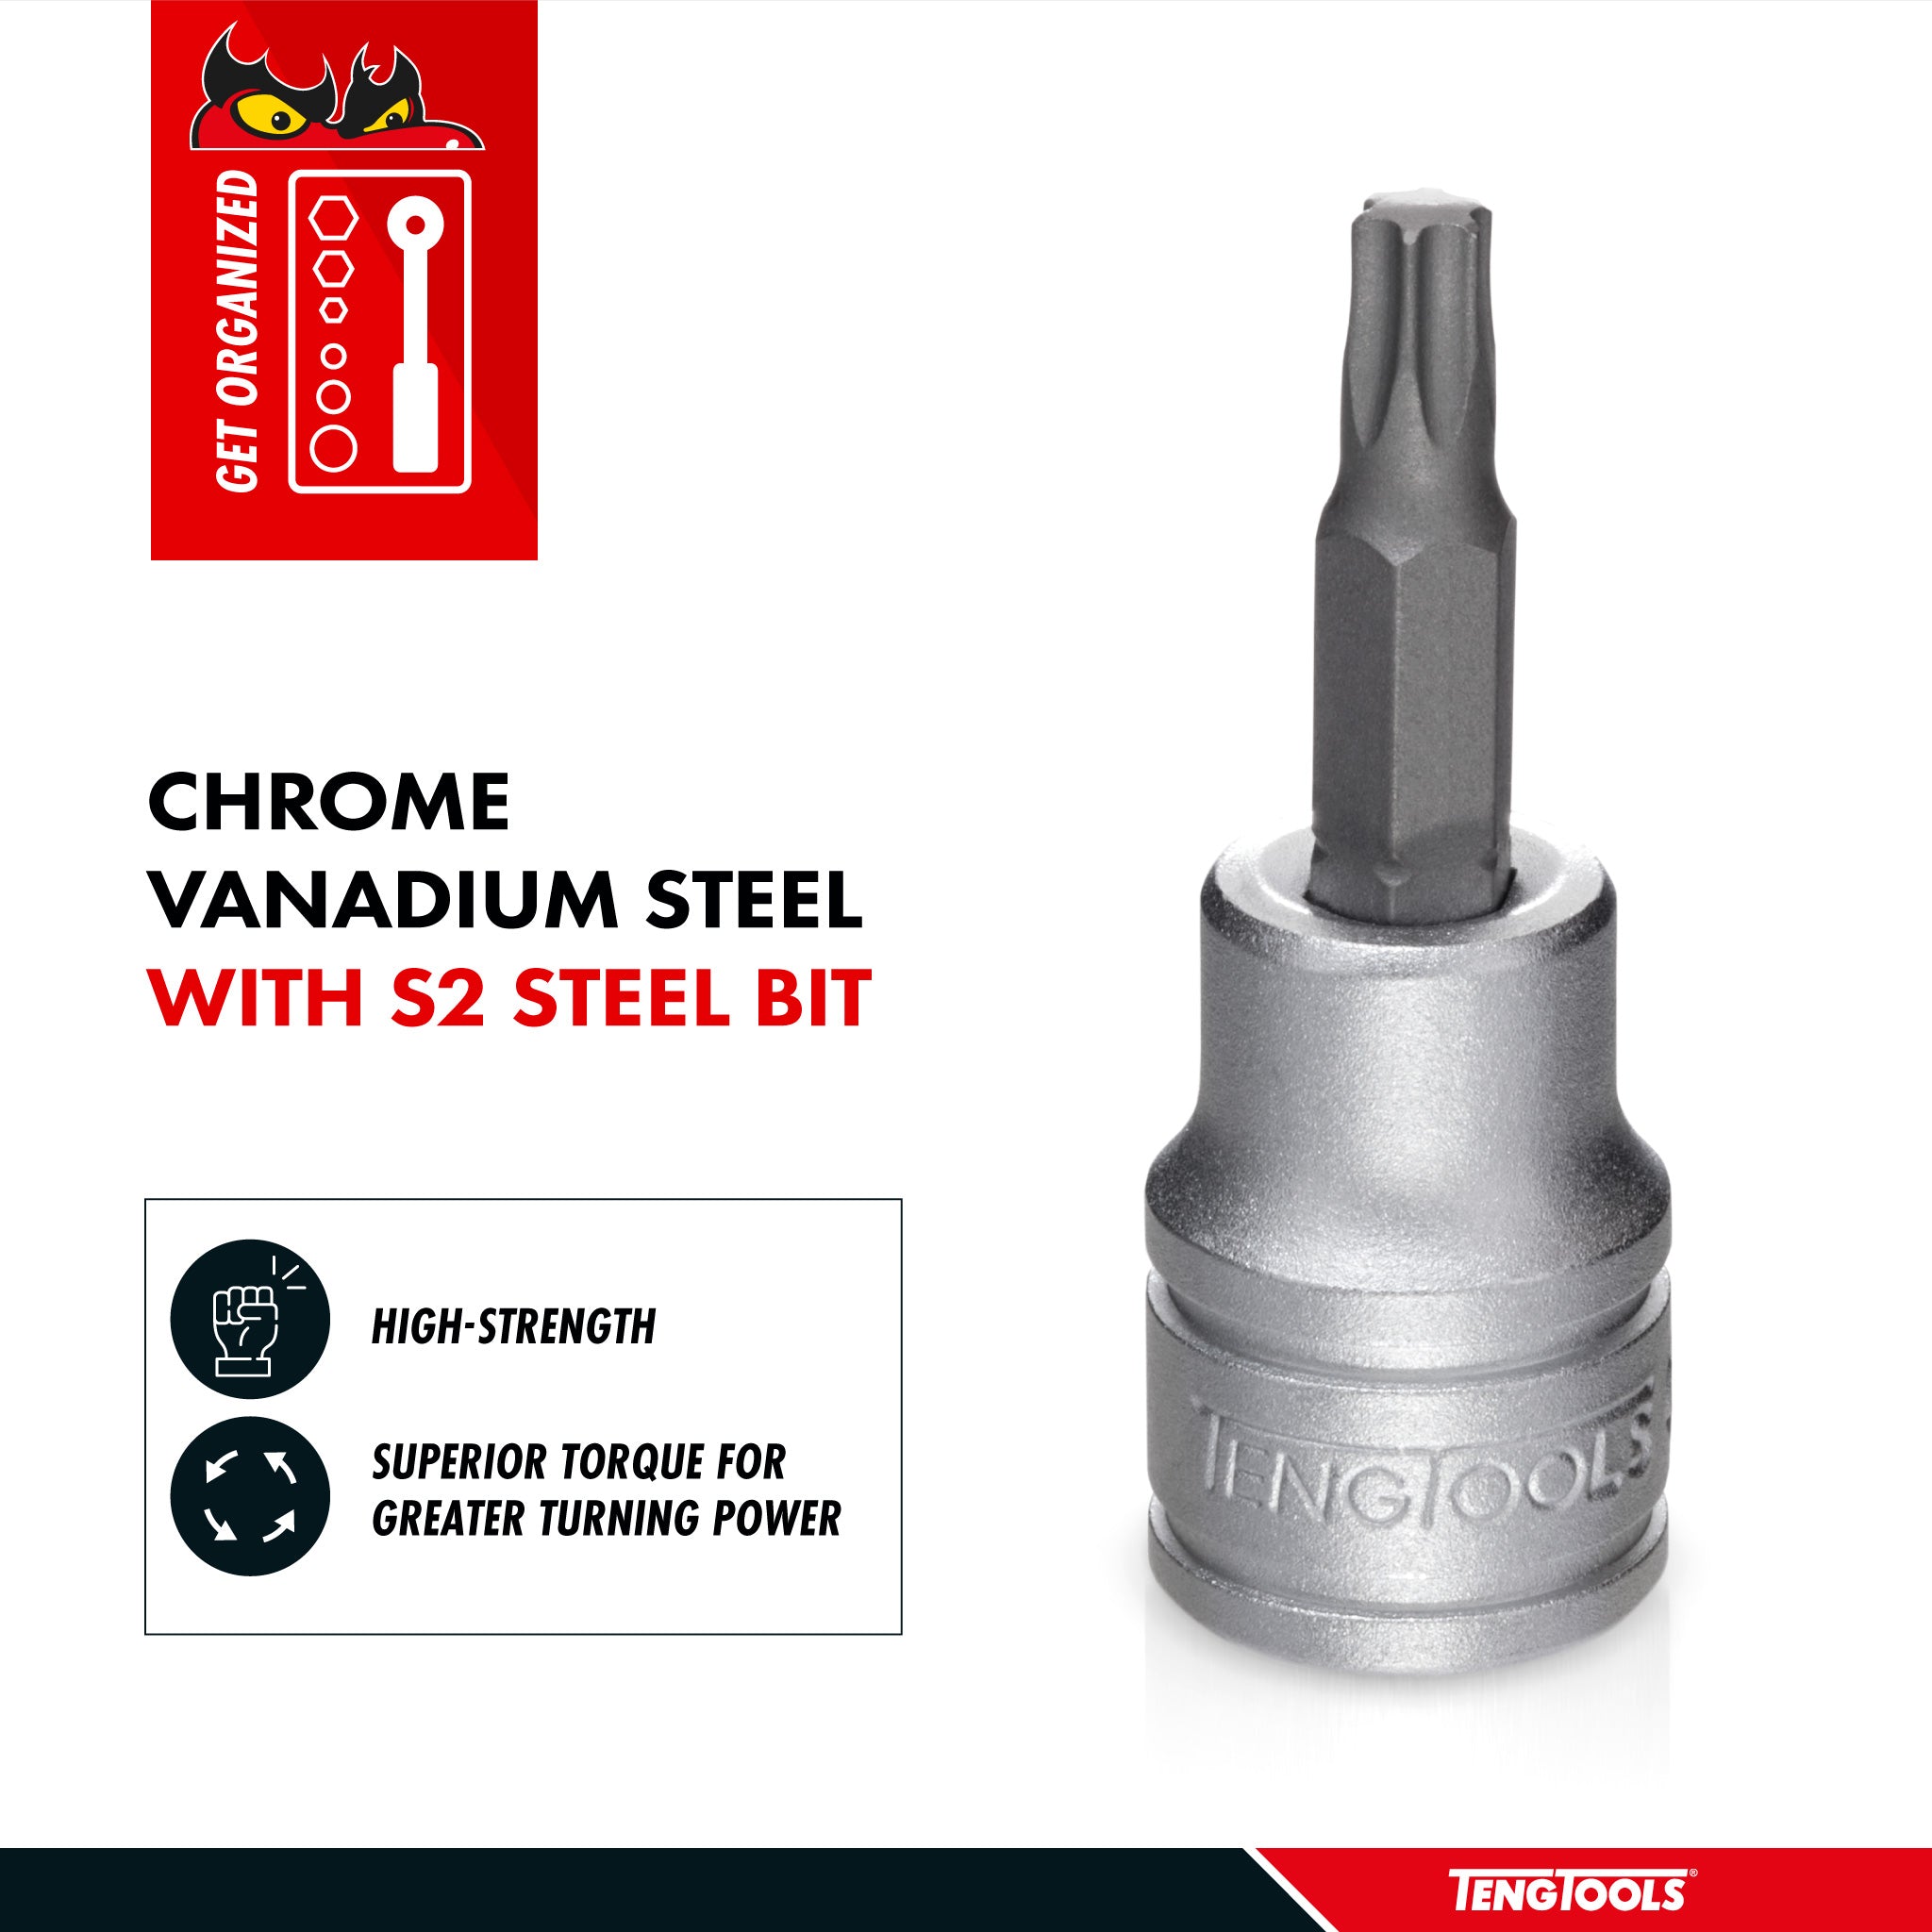 Teng Tools 1/2 Inch Drive Metric Torx TX Chrome Vanadium Sockets - TX55